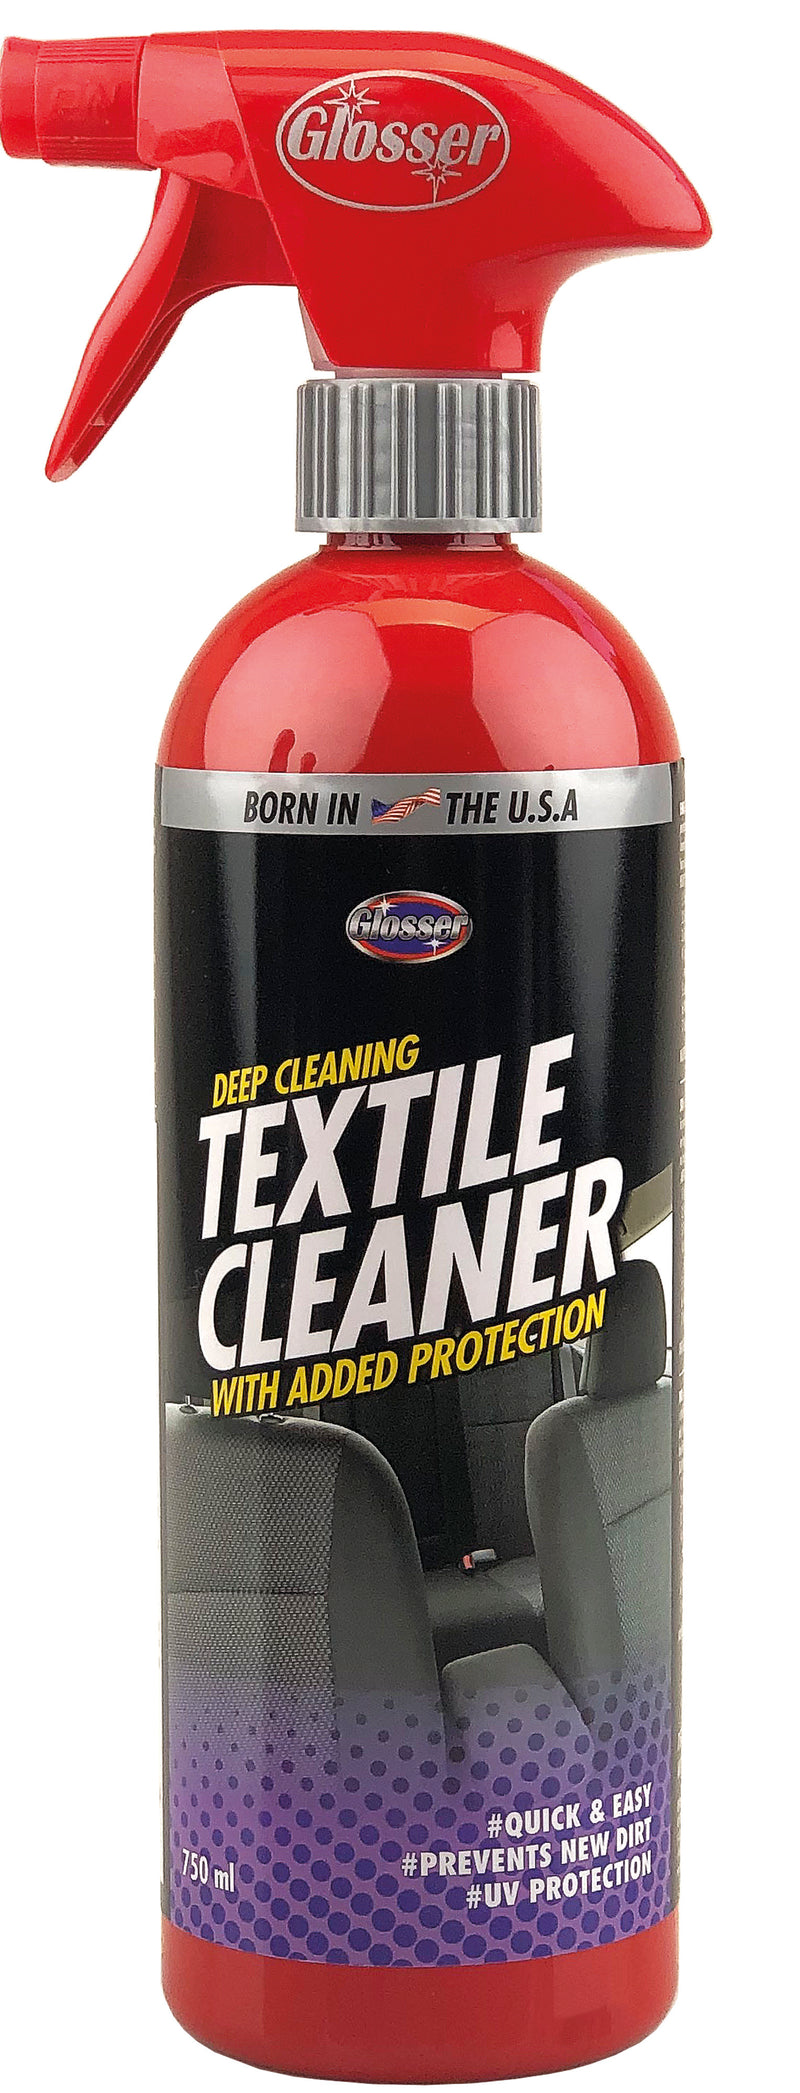 Glosser Textile Cleaner, 750ml